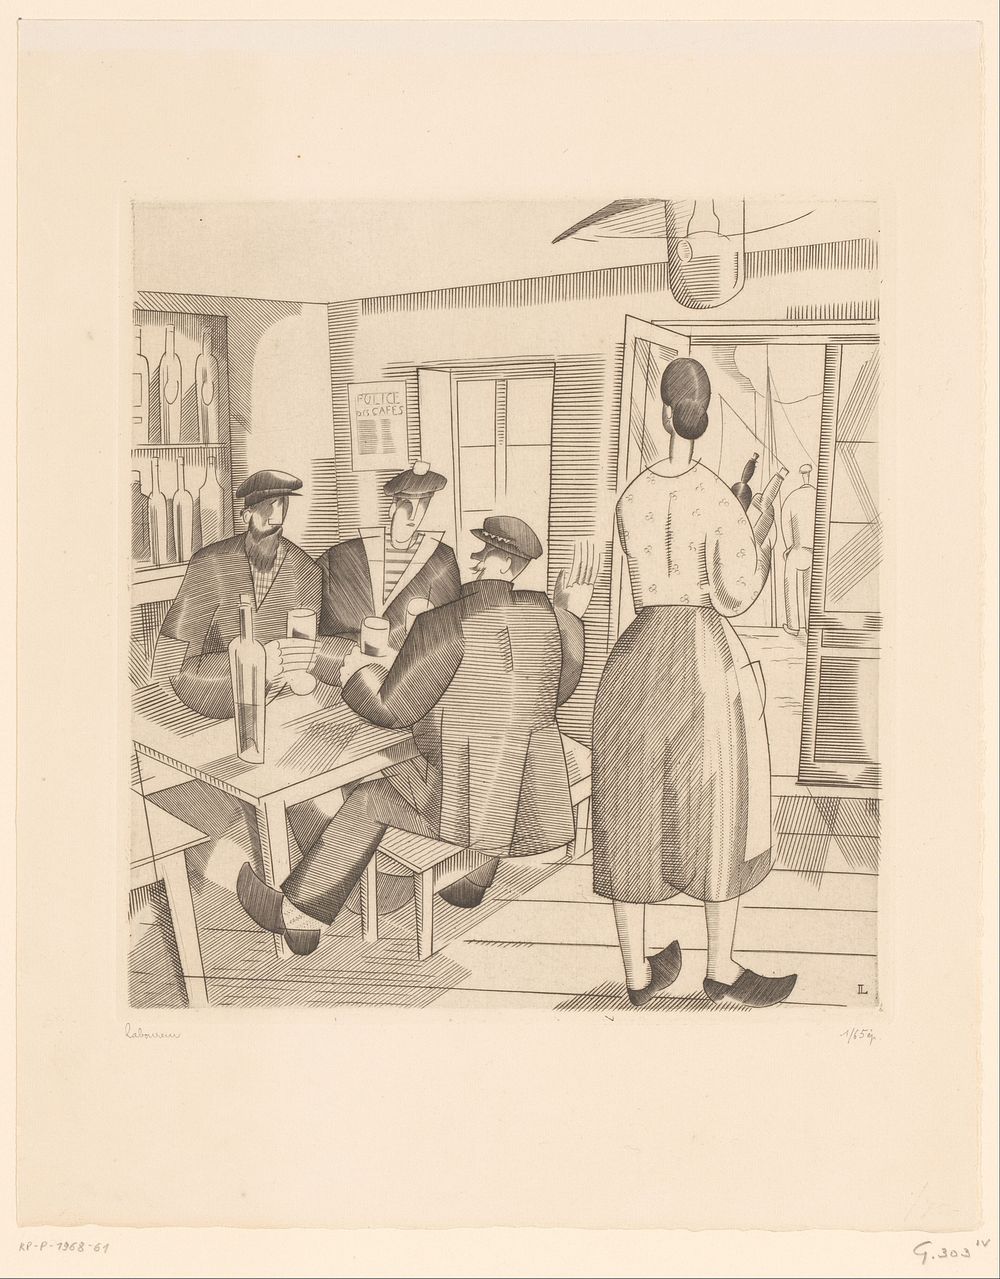 Caféinterieur met klanten en serveerster (1925) by Jean Emile Laboureur